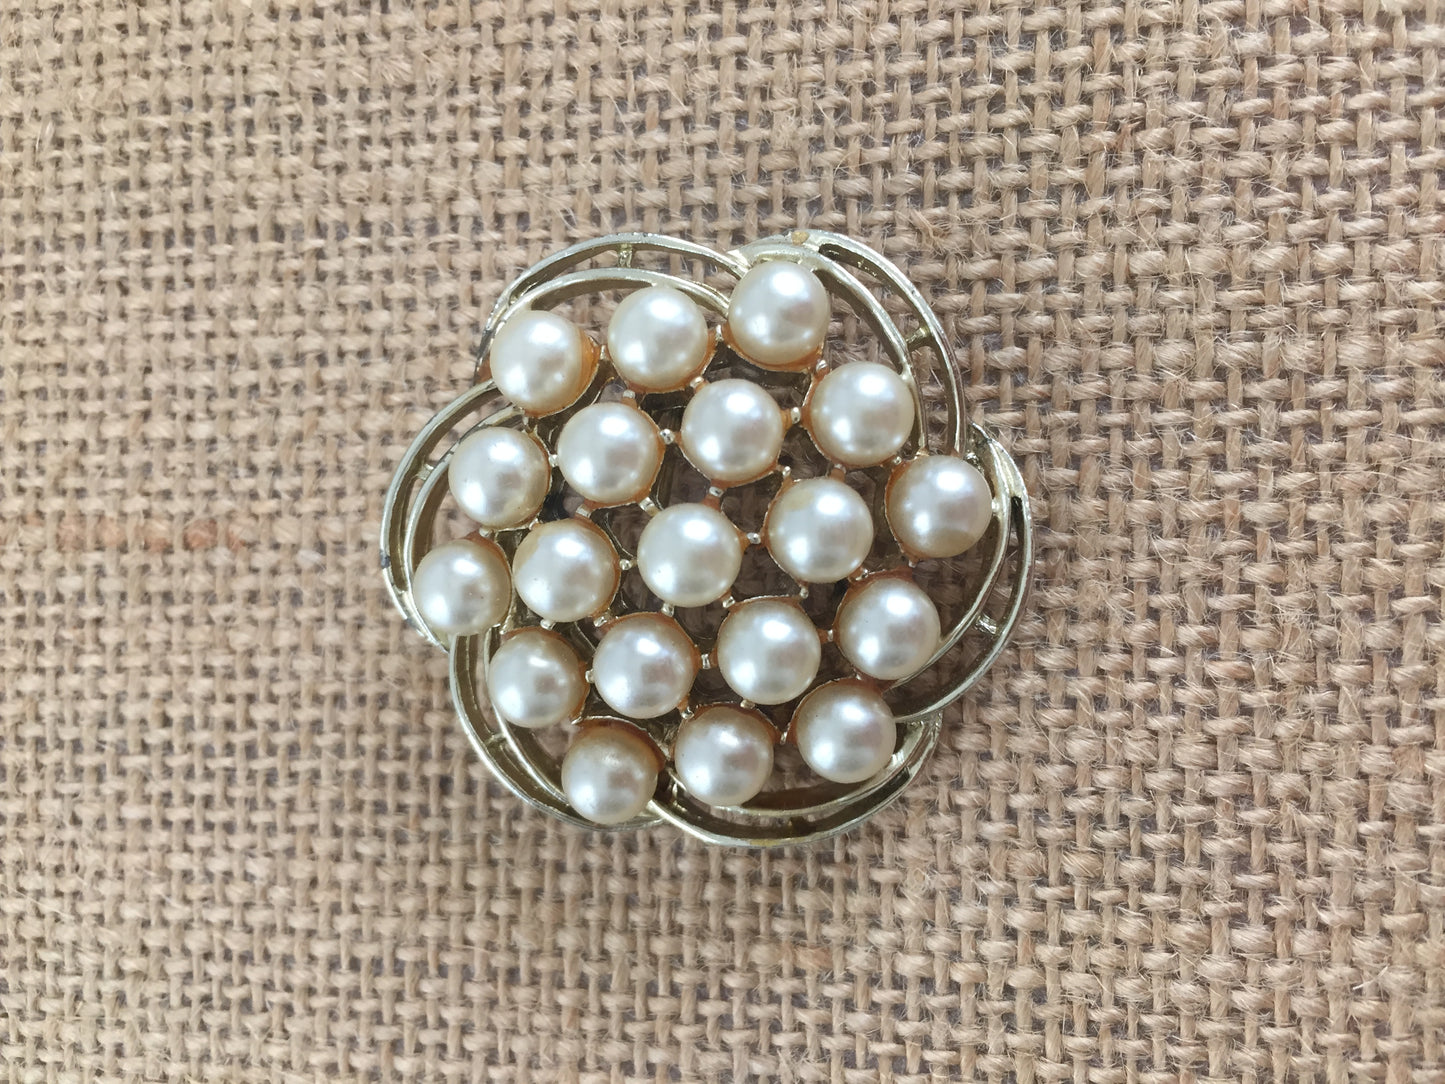 Stunning Vintage Pearl Brooch